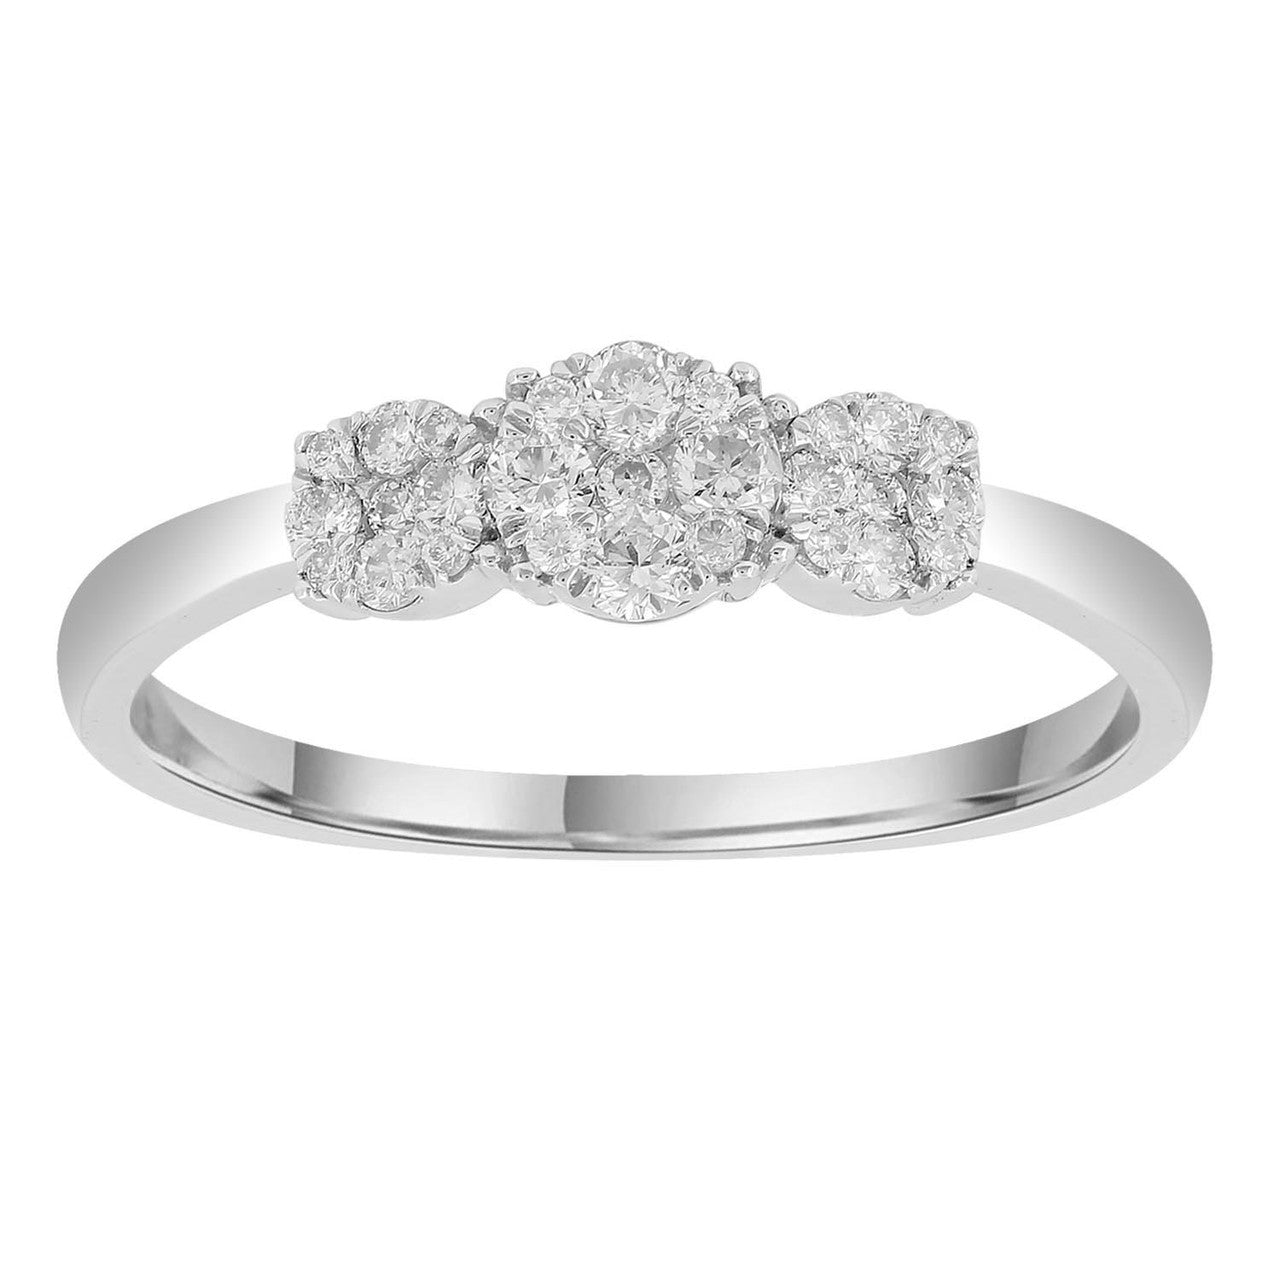 Ice Jewellery Ring with 0.33ct Diamonds in 9K White Gold -  IGR-37905-W | Ice Jewellery Australia